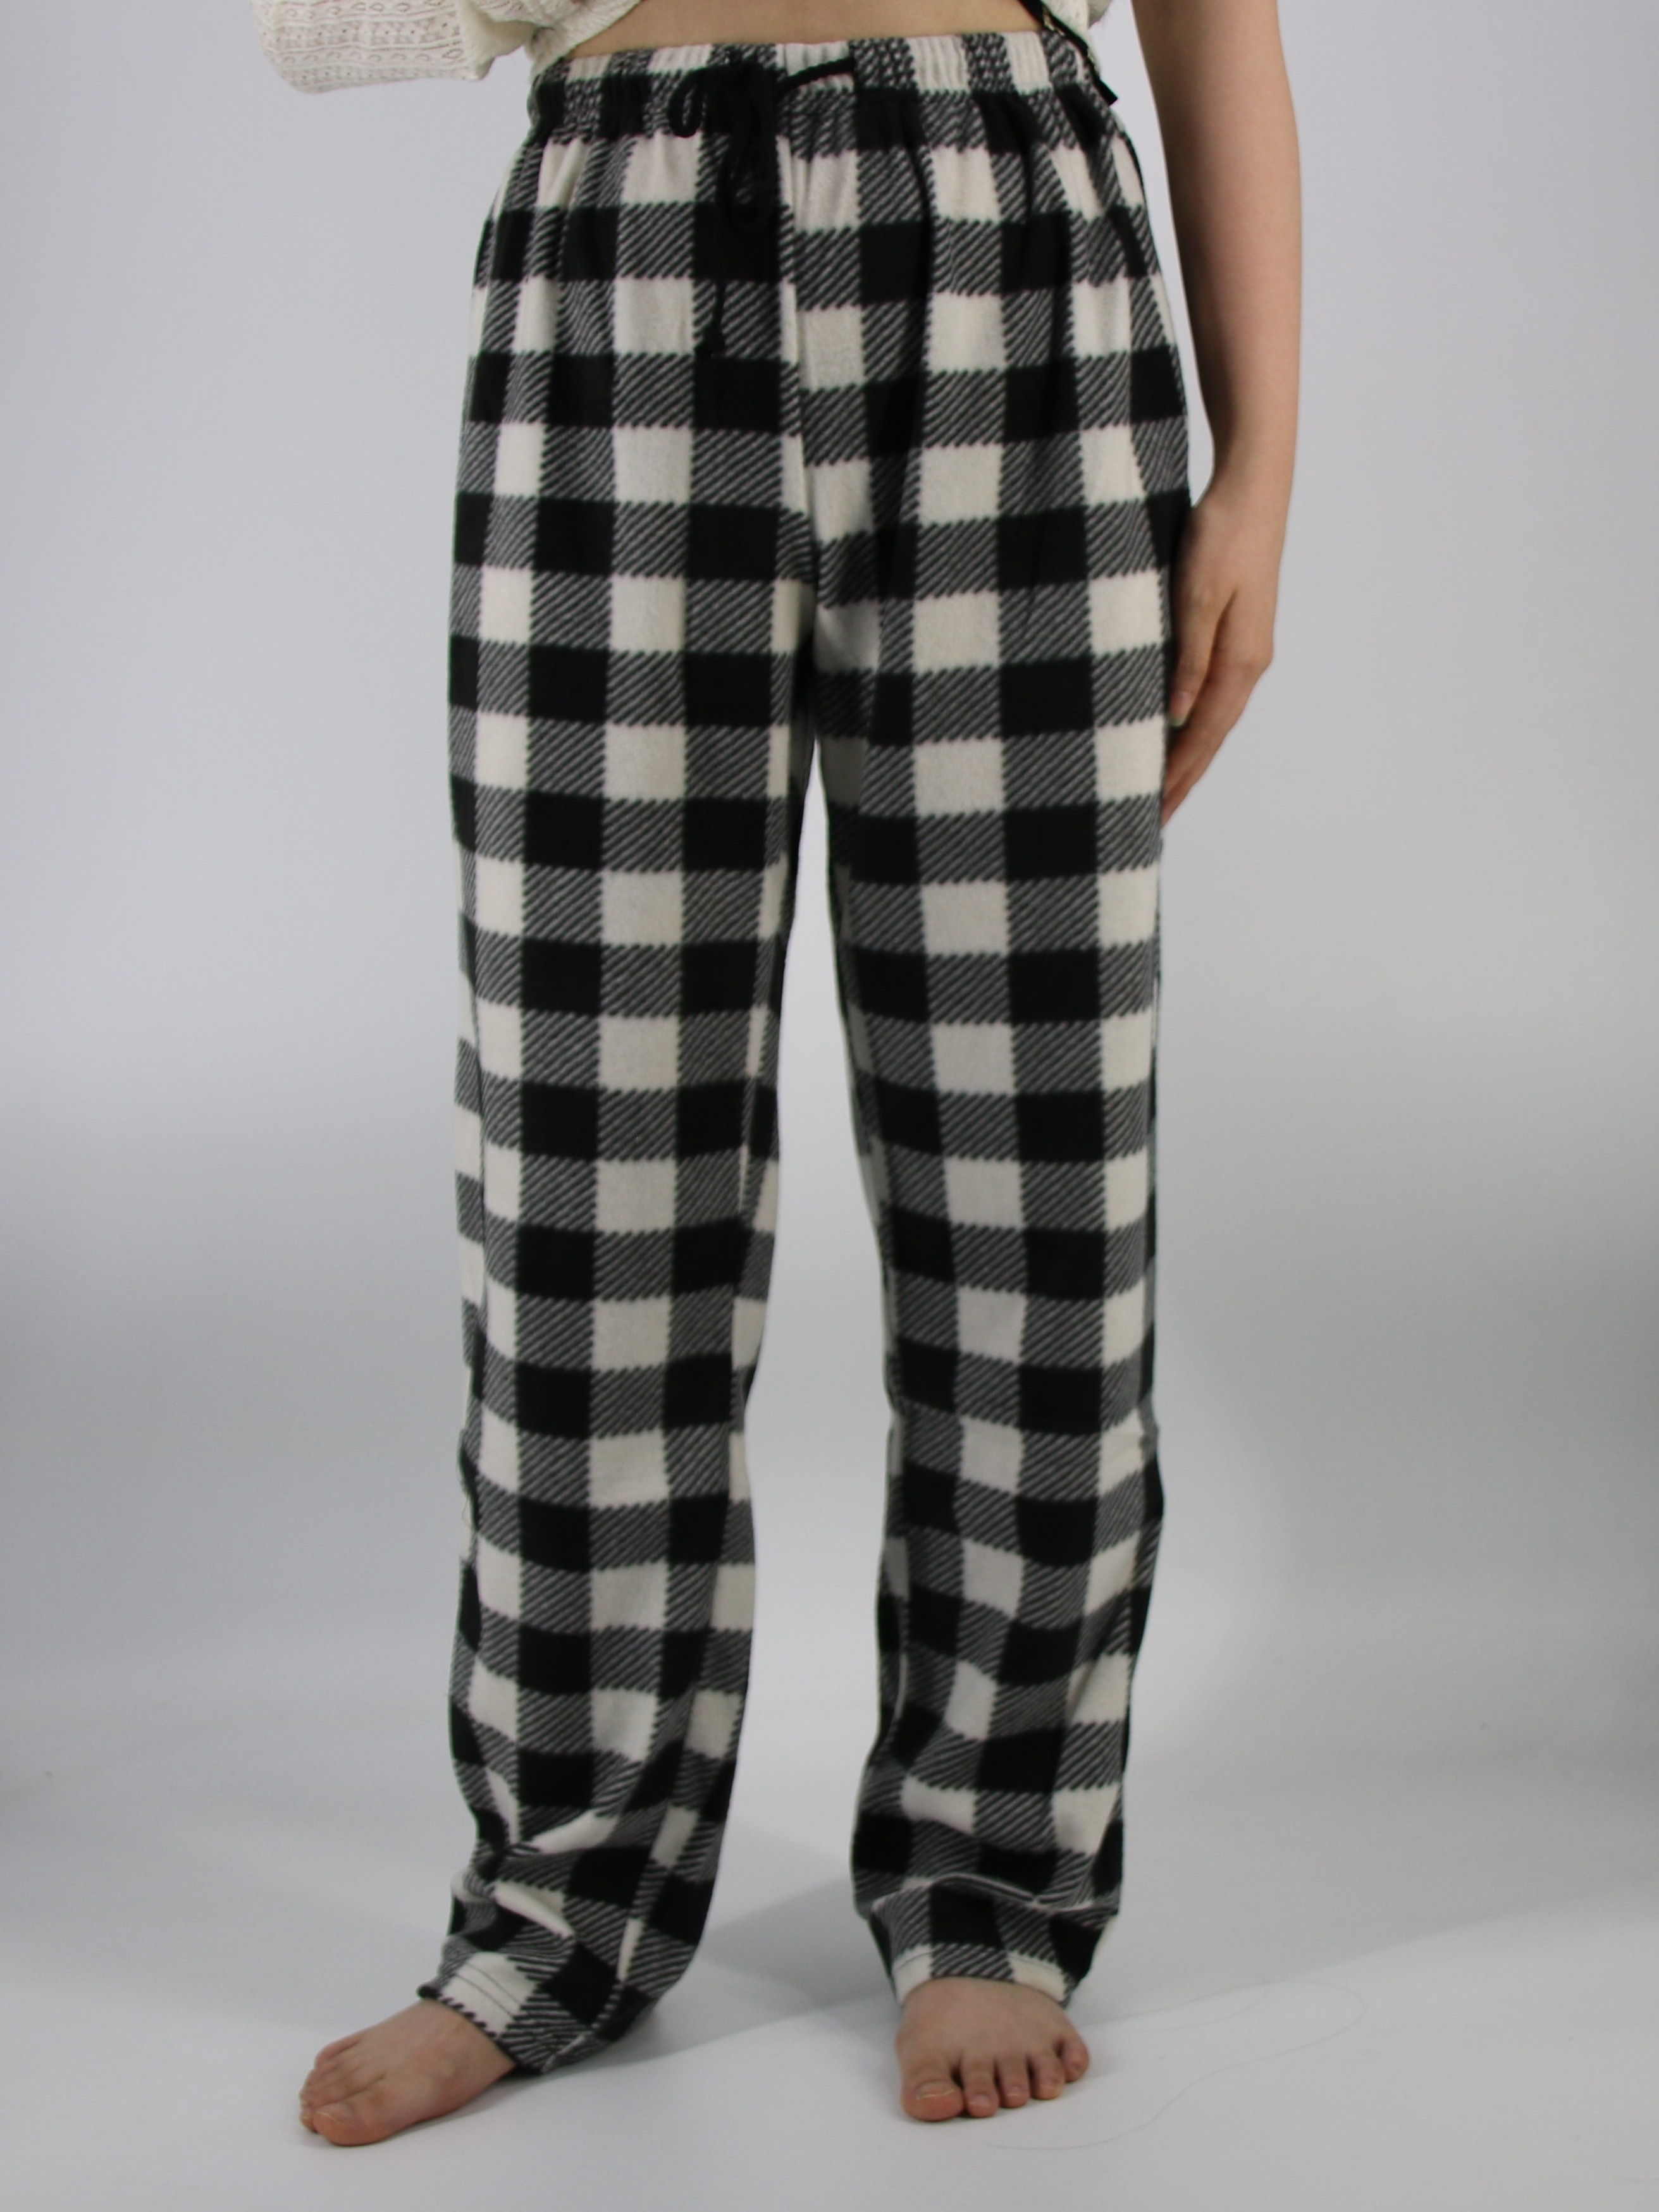 Women's 2-pack Lounge Pants Comfortable Pajama Pants Plaid Pajama Pants  With Pocket Drawstring Pajama Pants